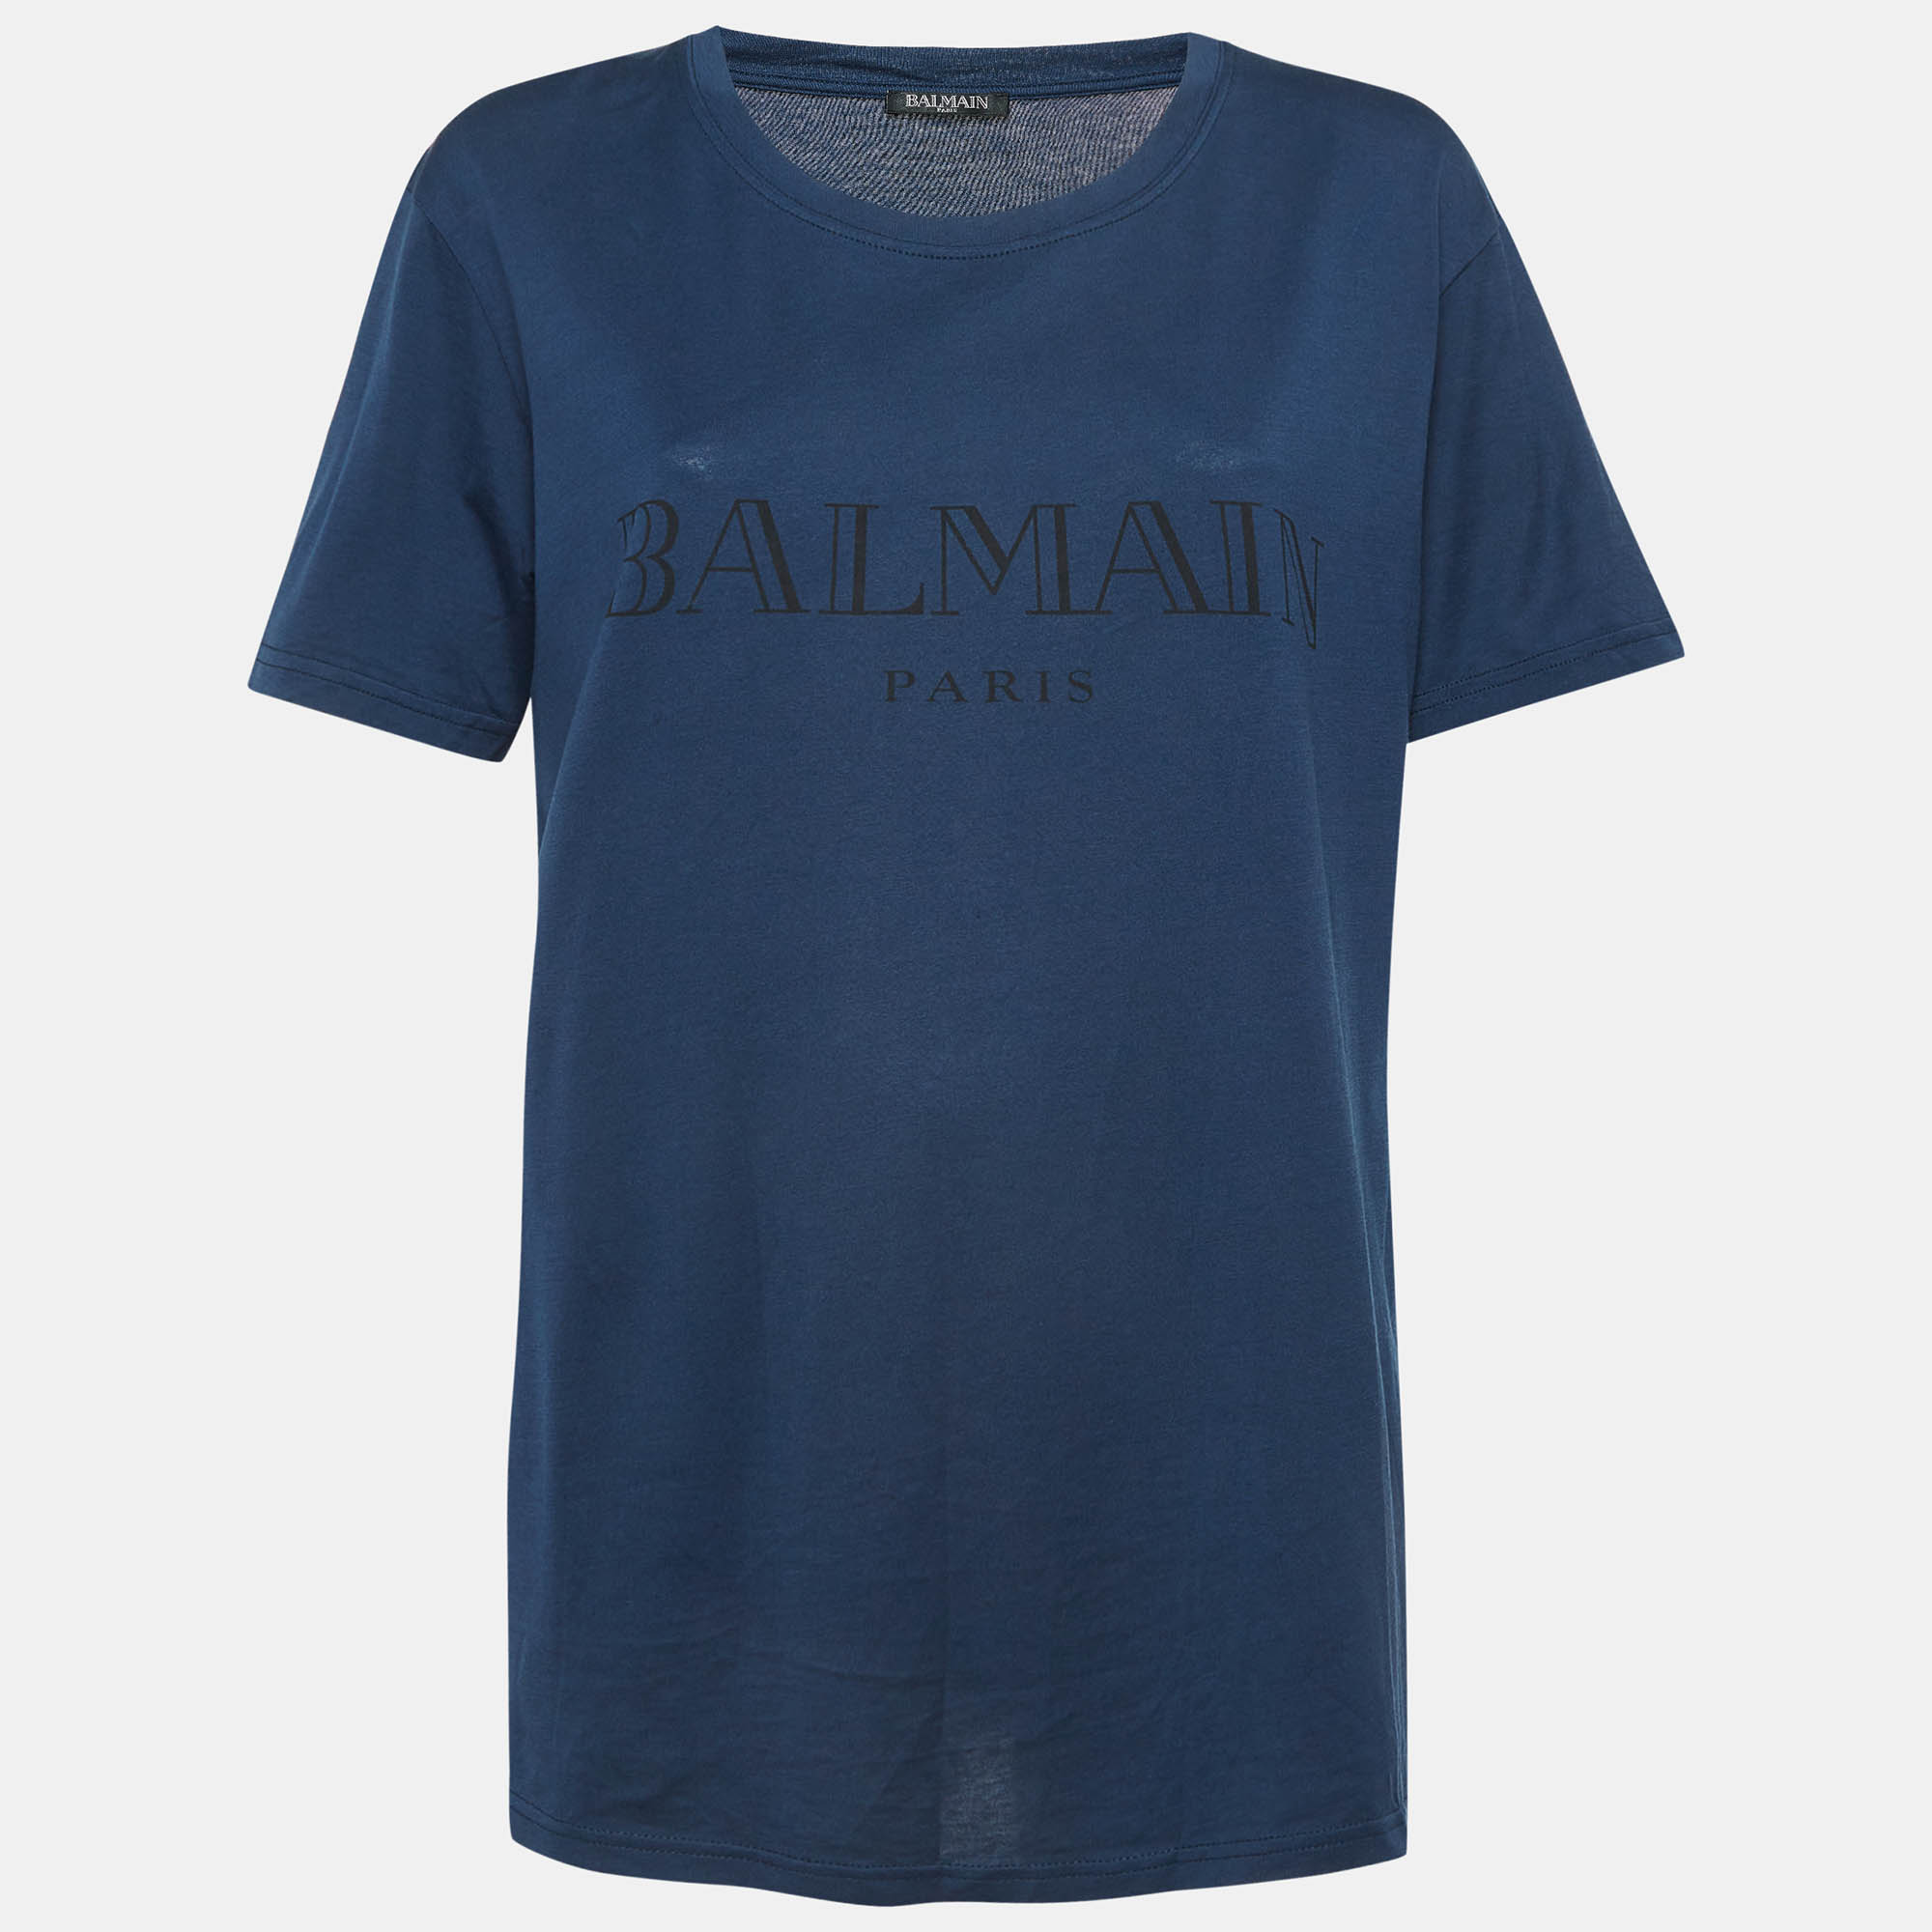 Balmain navy blue logo print cotton half sleeve t-shirt l